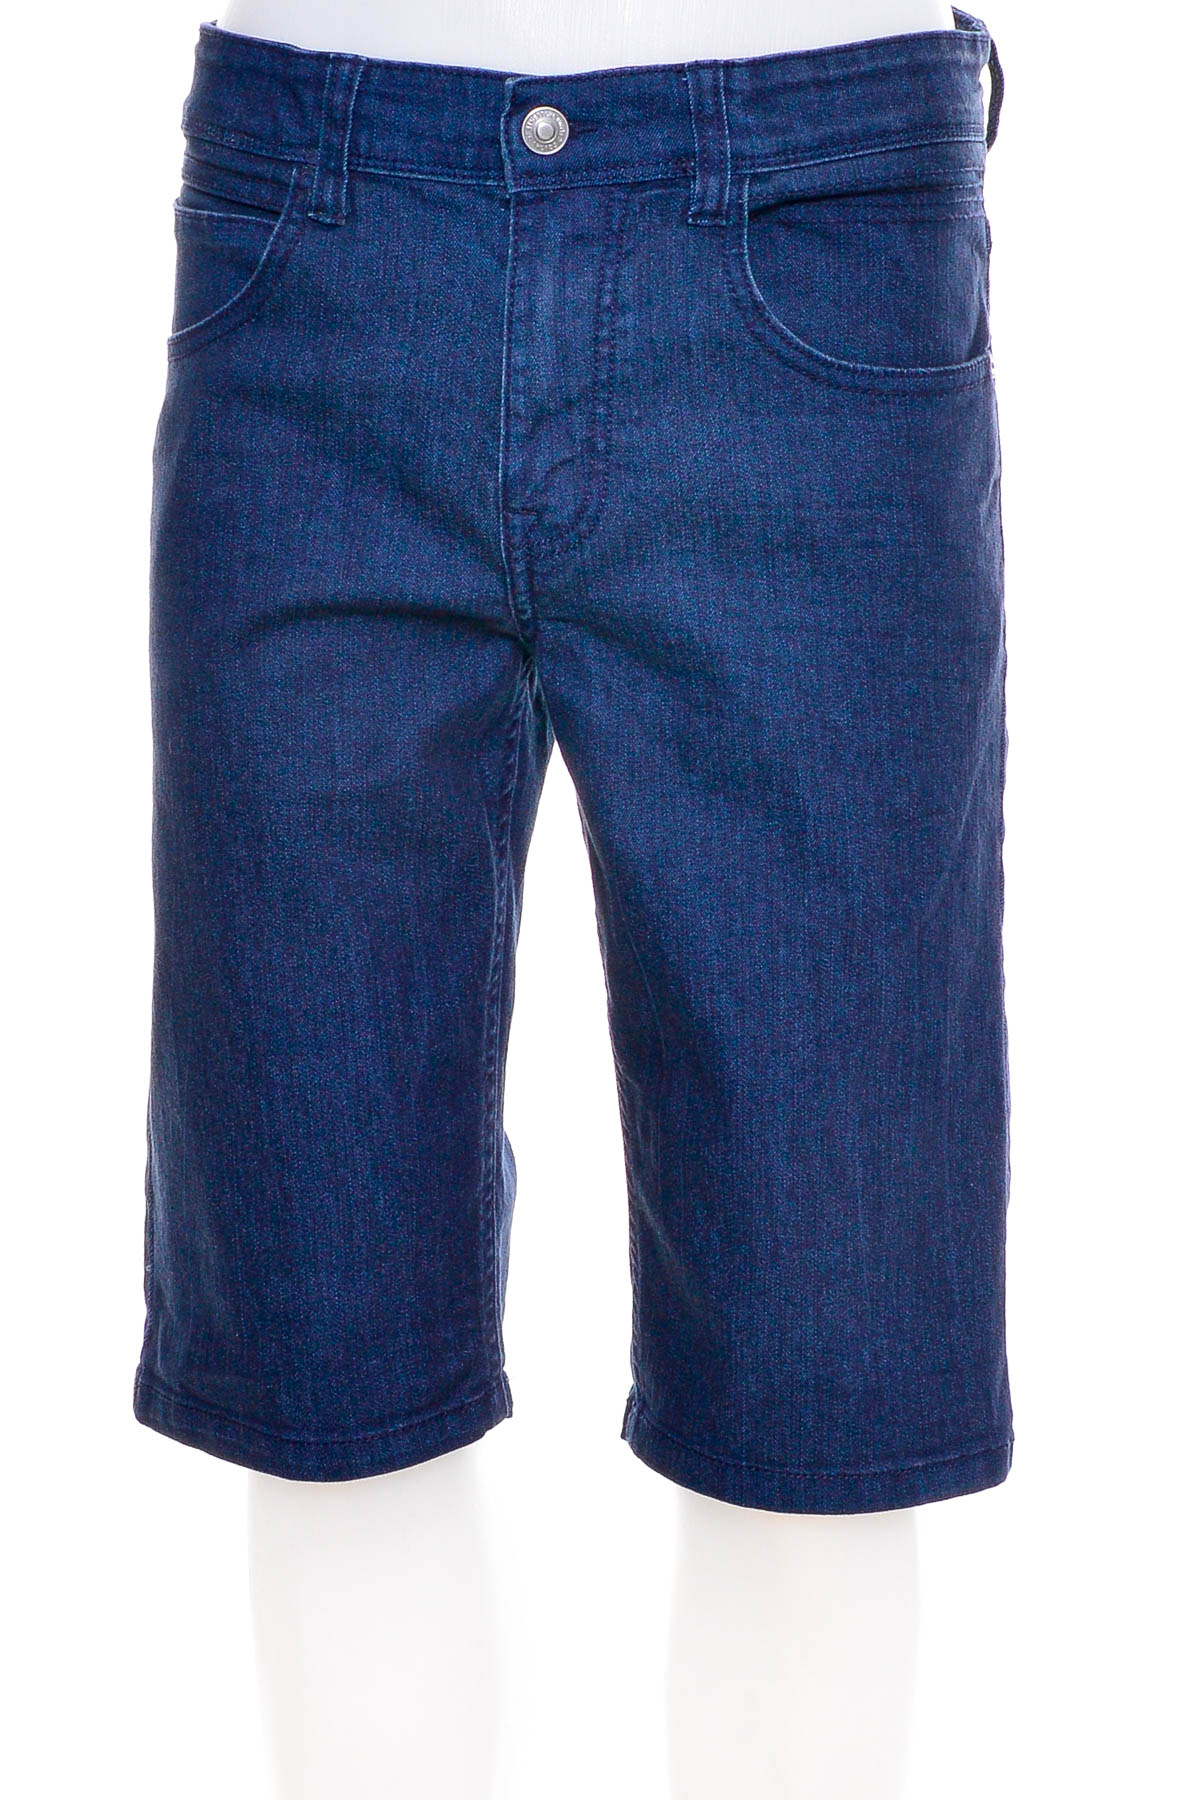 Men's shorts - United Colors of Benetton - 0